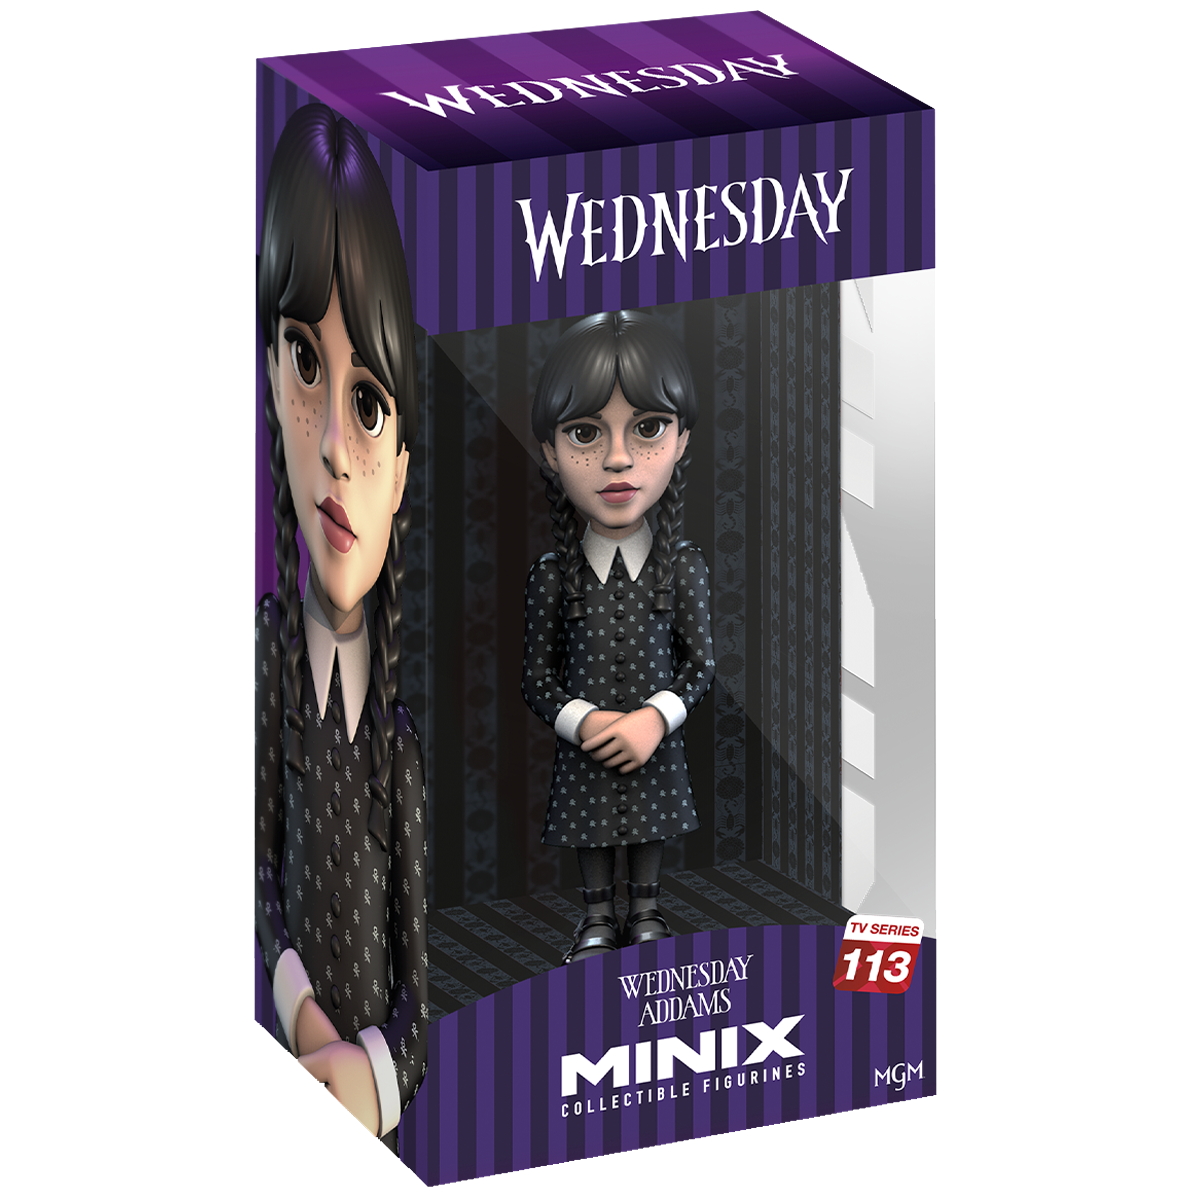 Minix collectible figurines - wednesday addams - 